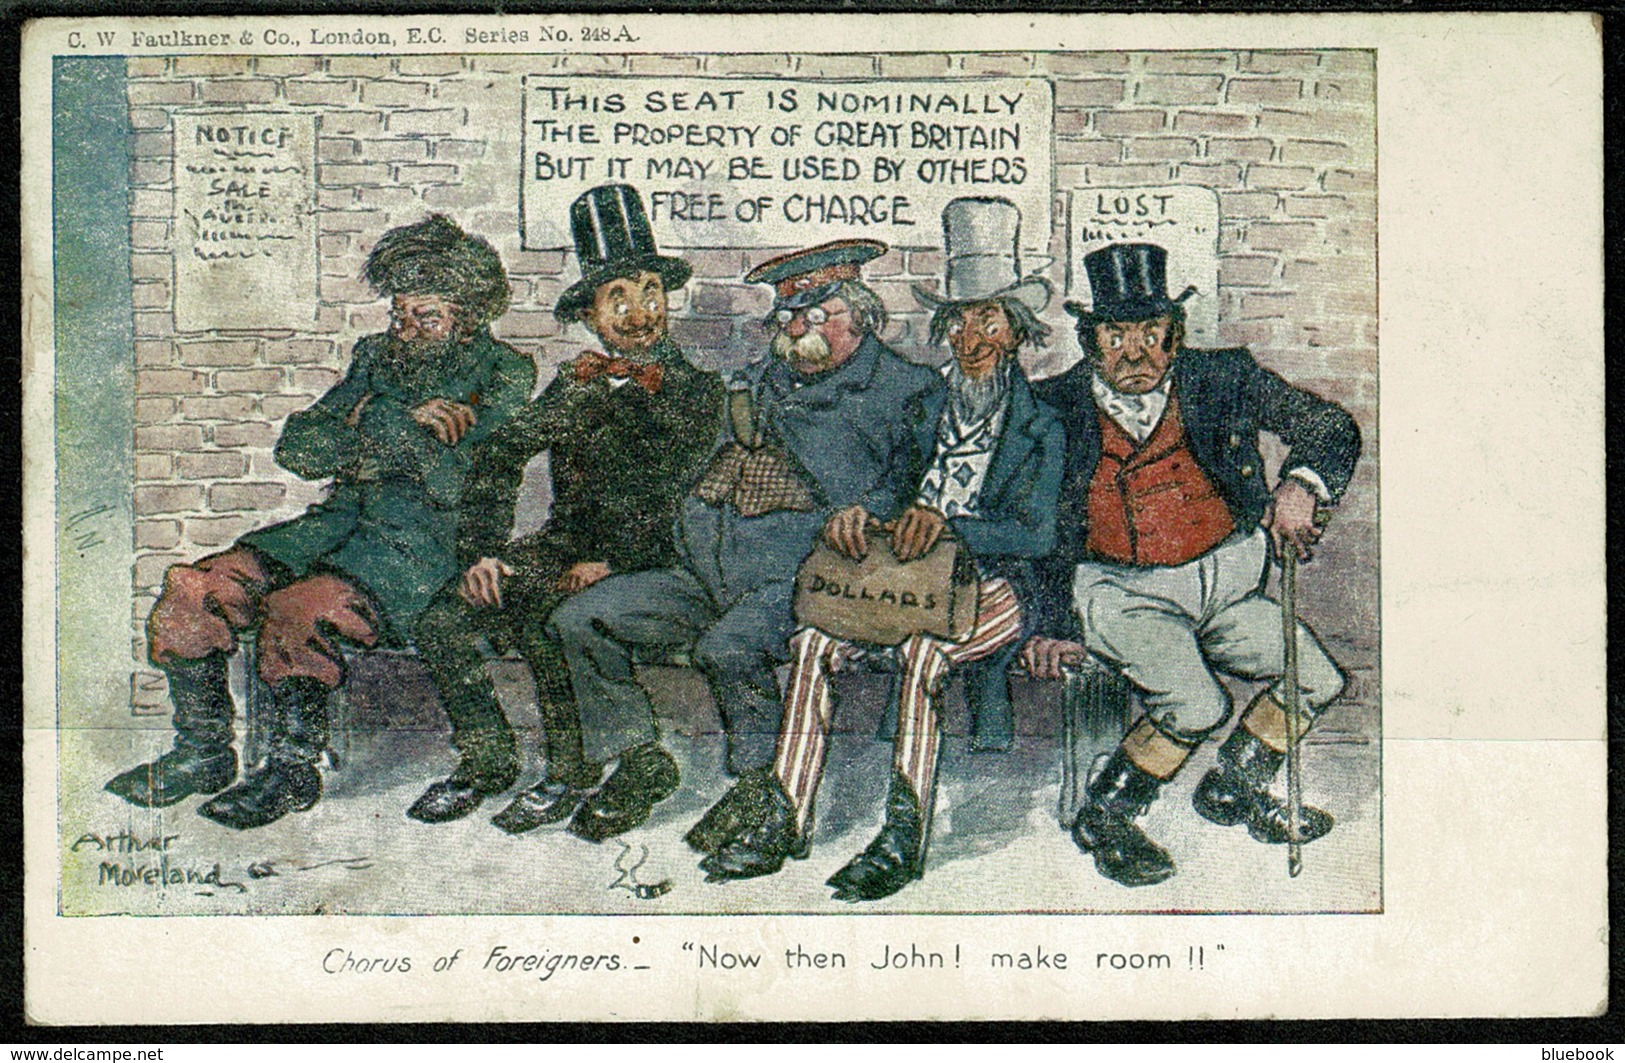 Ref 1258 - 1903 Postcard - Arthur Moreland Political Politics Postcard Brexit Implications - London Underground Message - Satirical